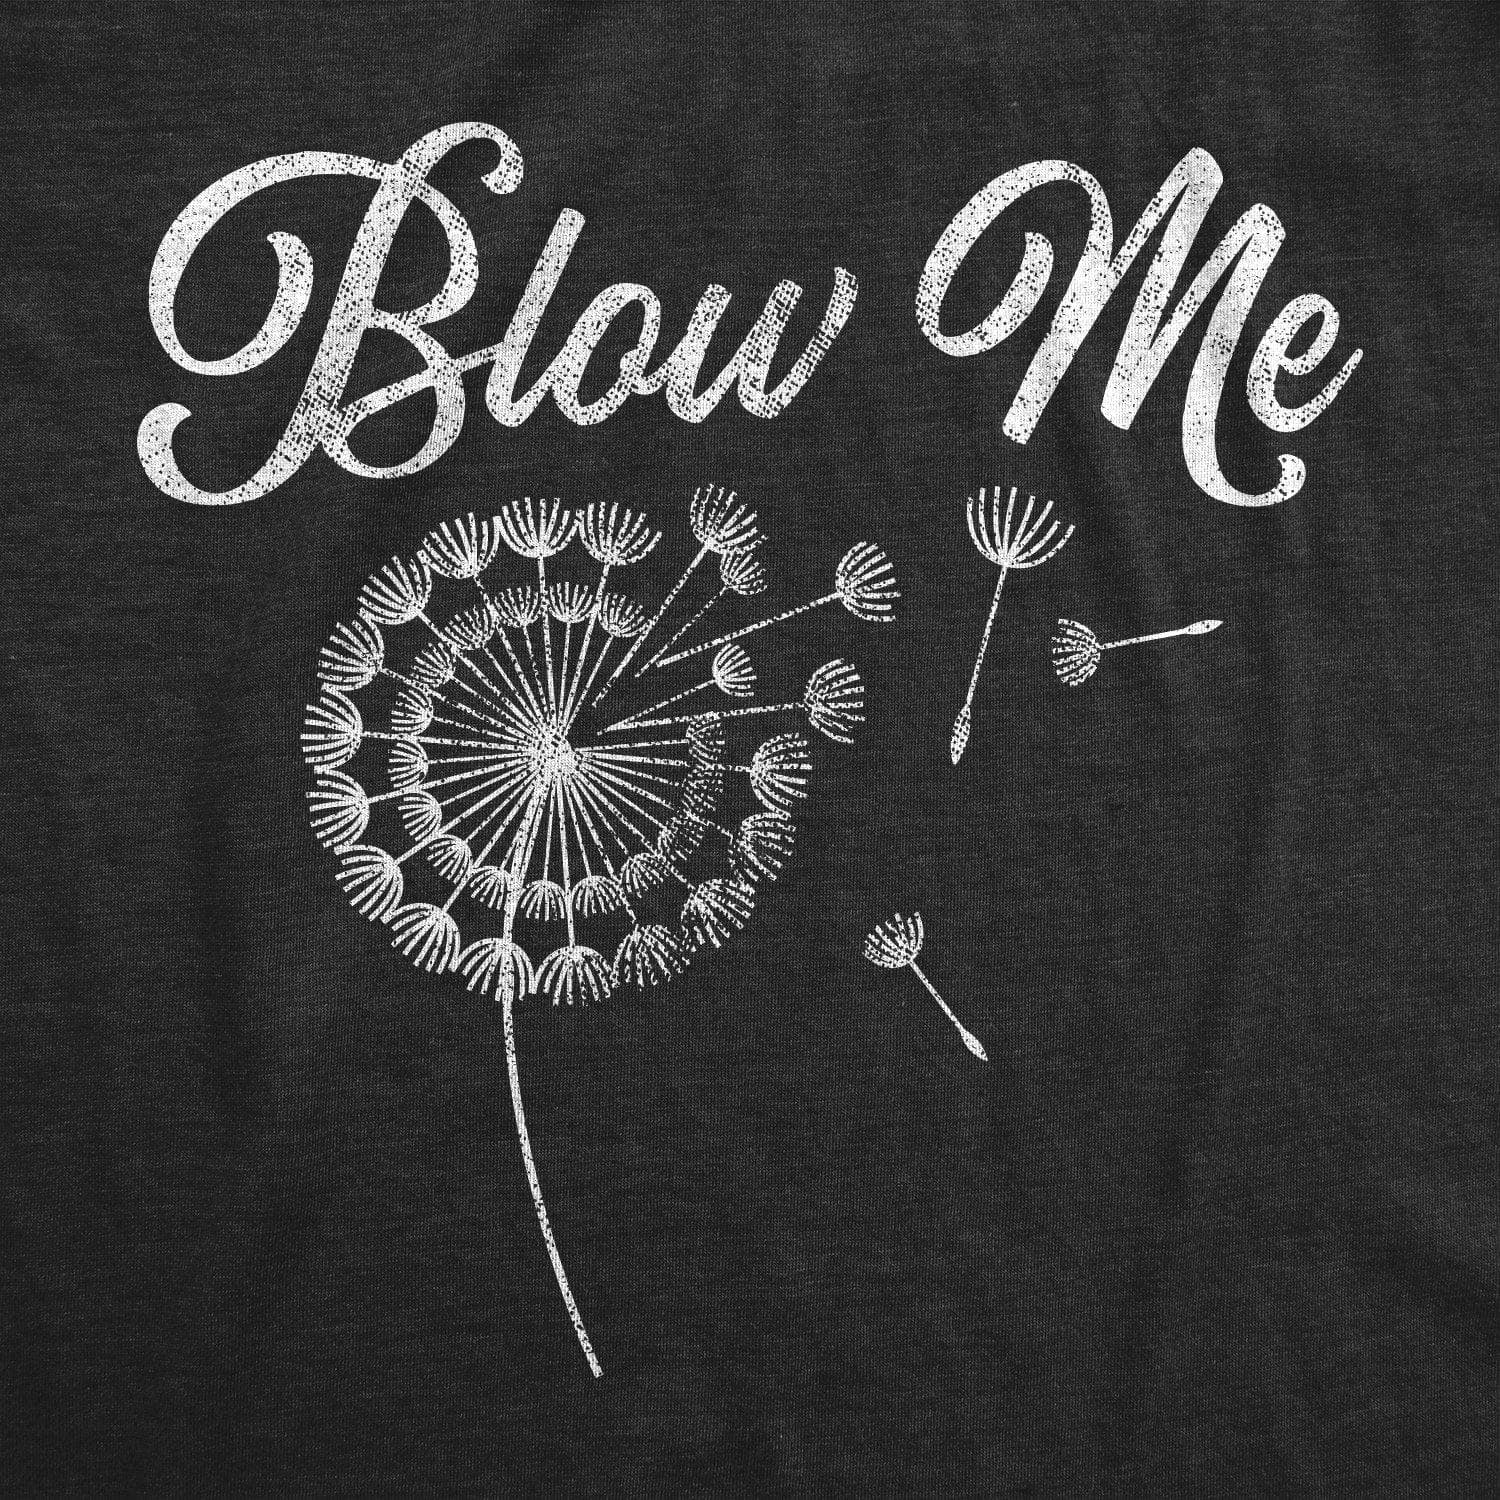 Blow Me Dandelion Women's Tshirt - Crazy Dog T-Shirts